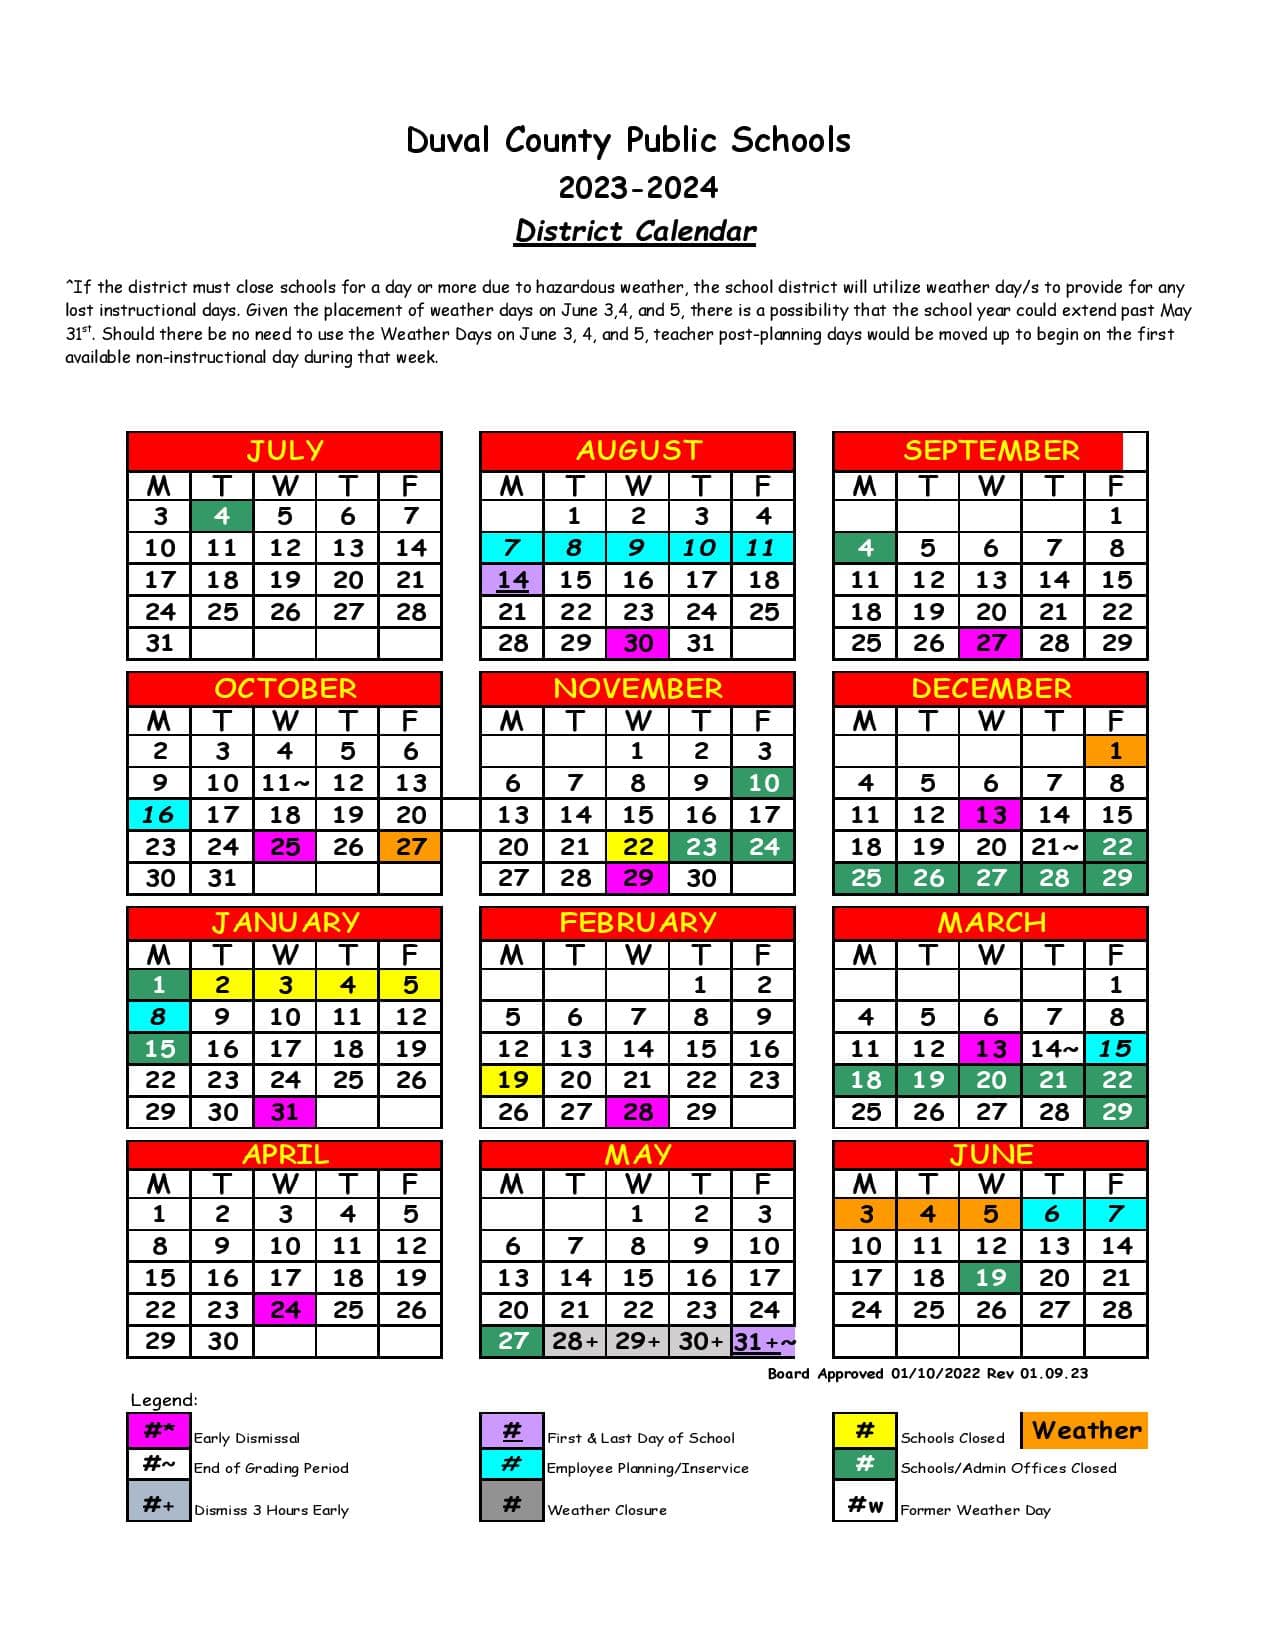 Duval County Schools Calendar 20232024 [Holiday Breaks]